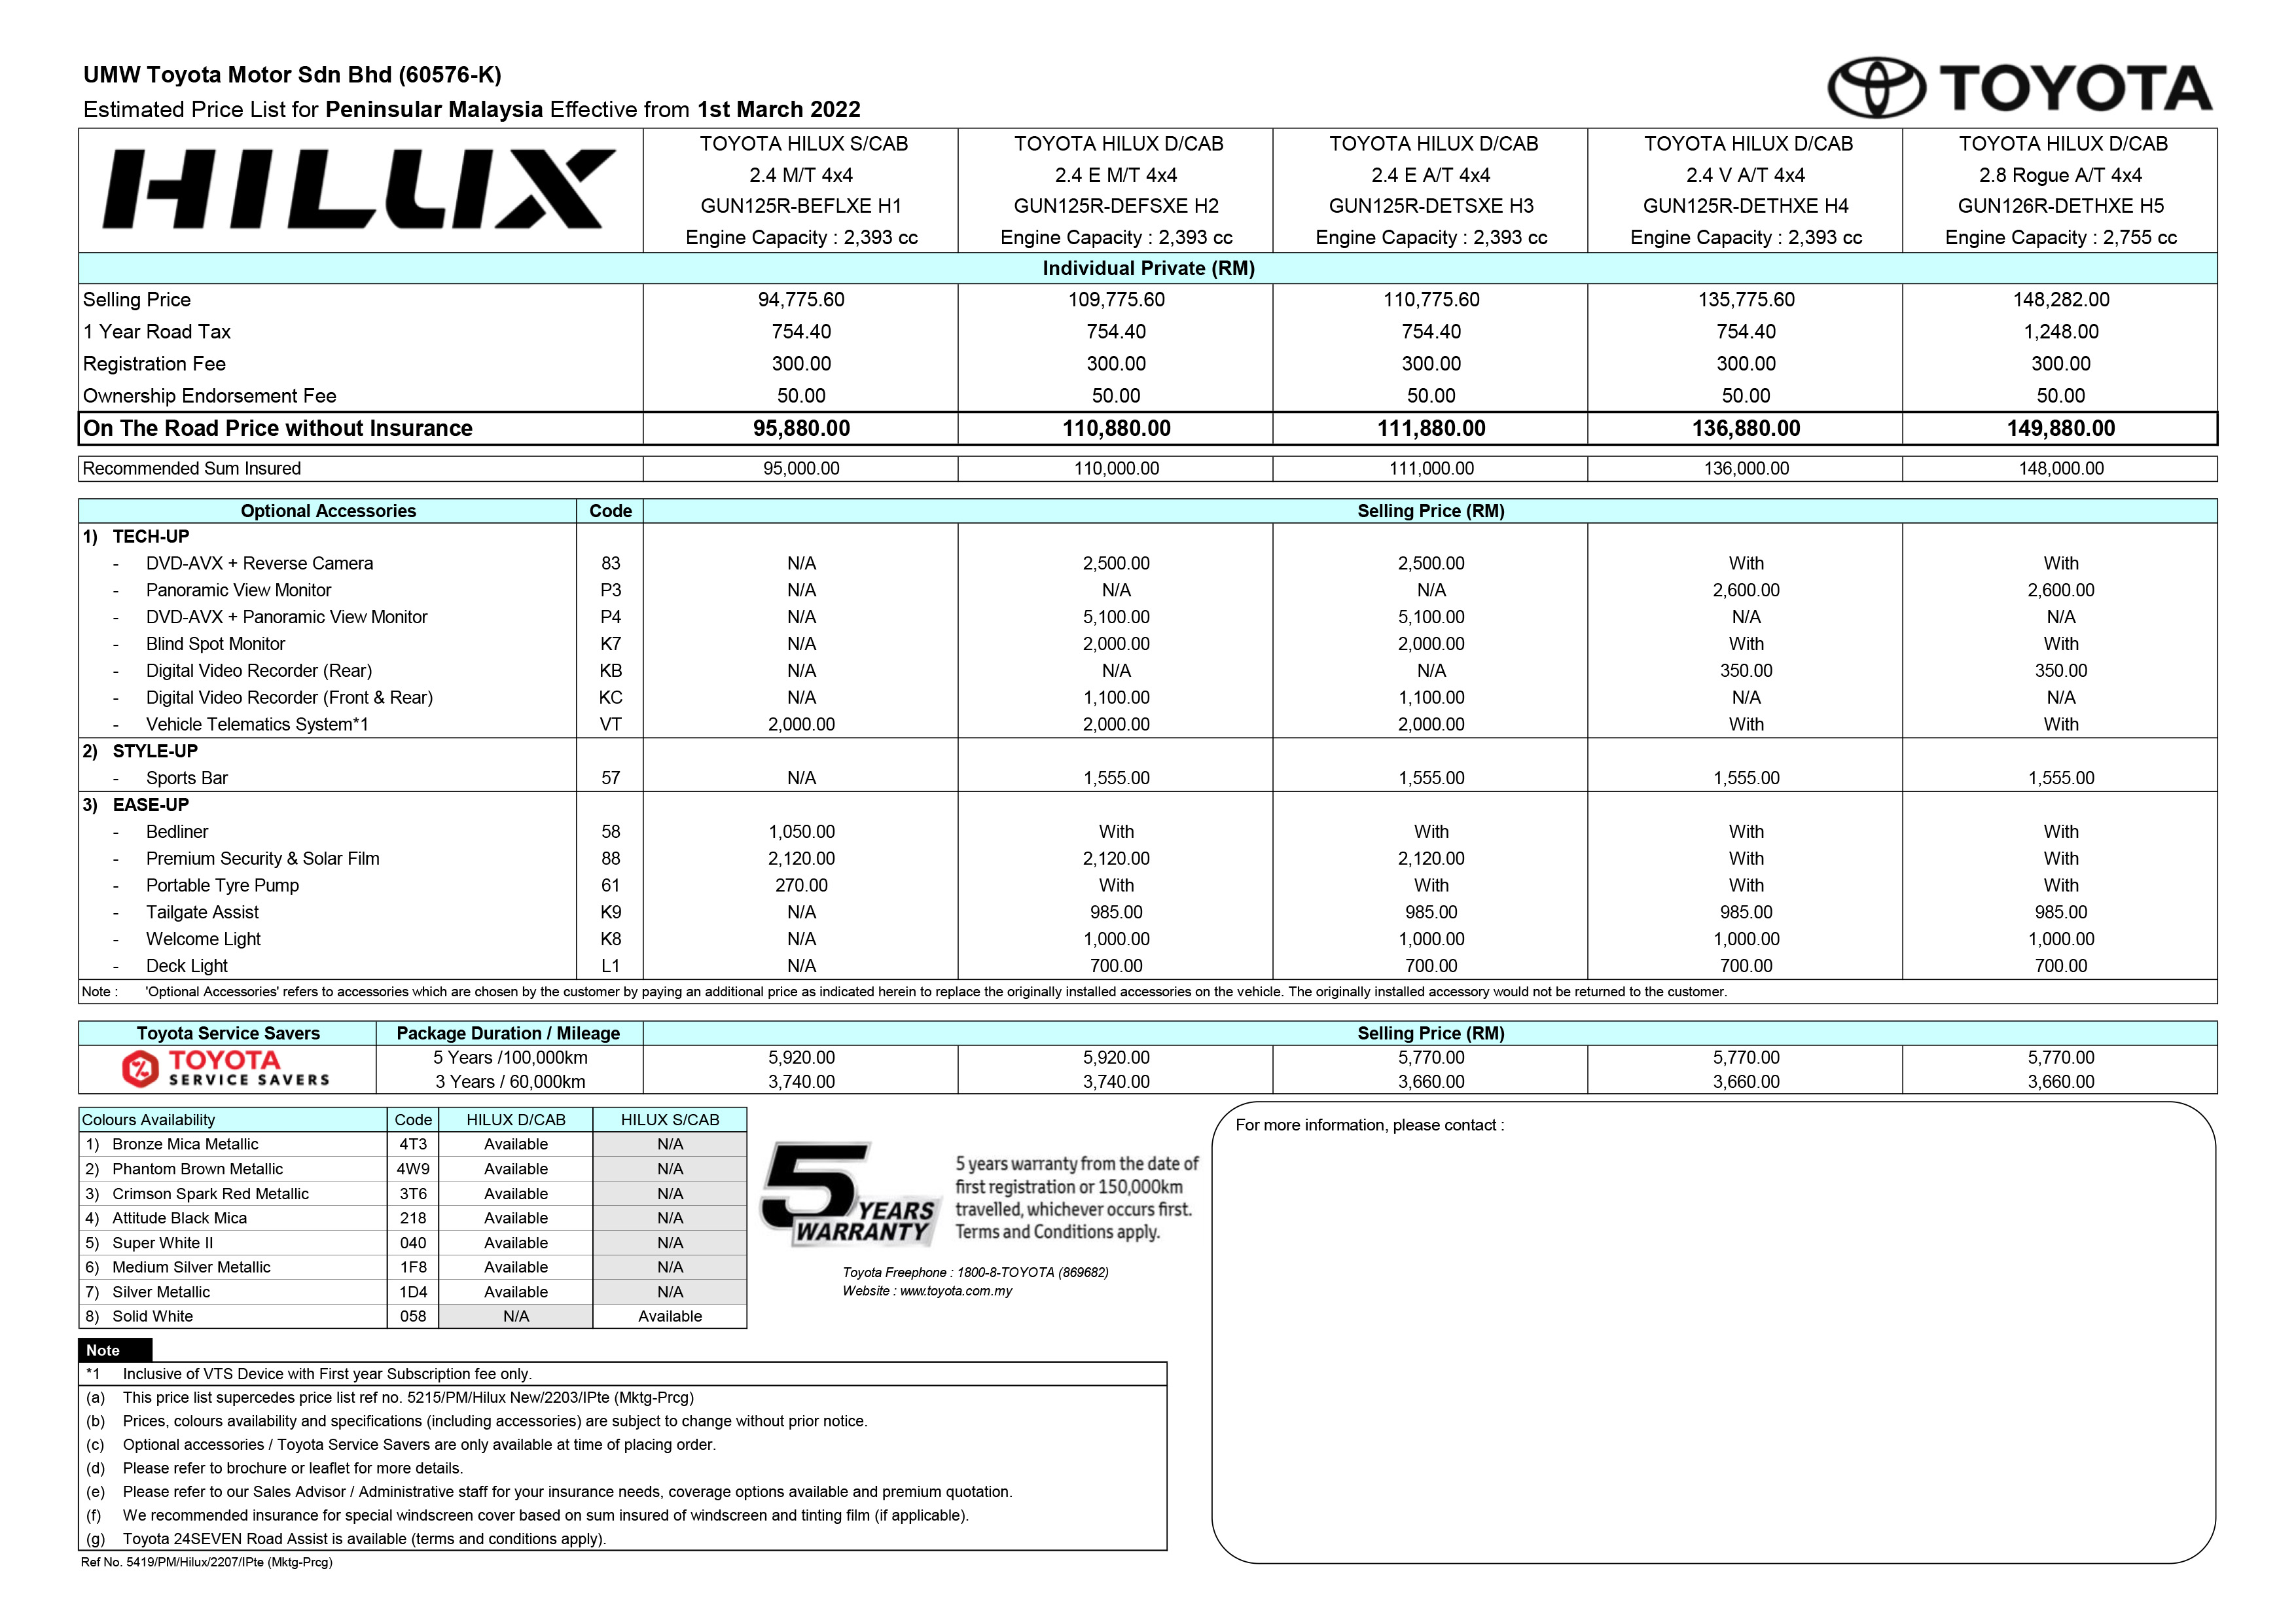 2022 Toyota Hilux price list-Malaysia-1